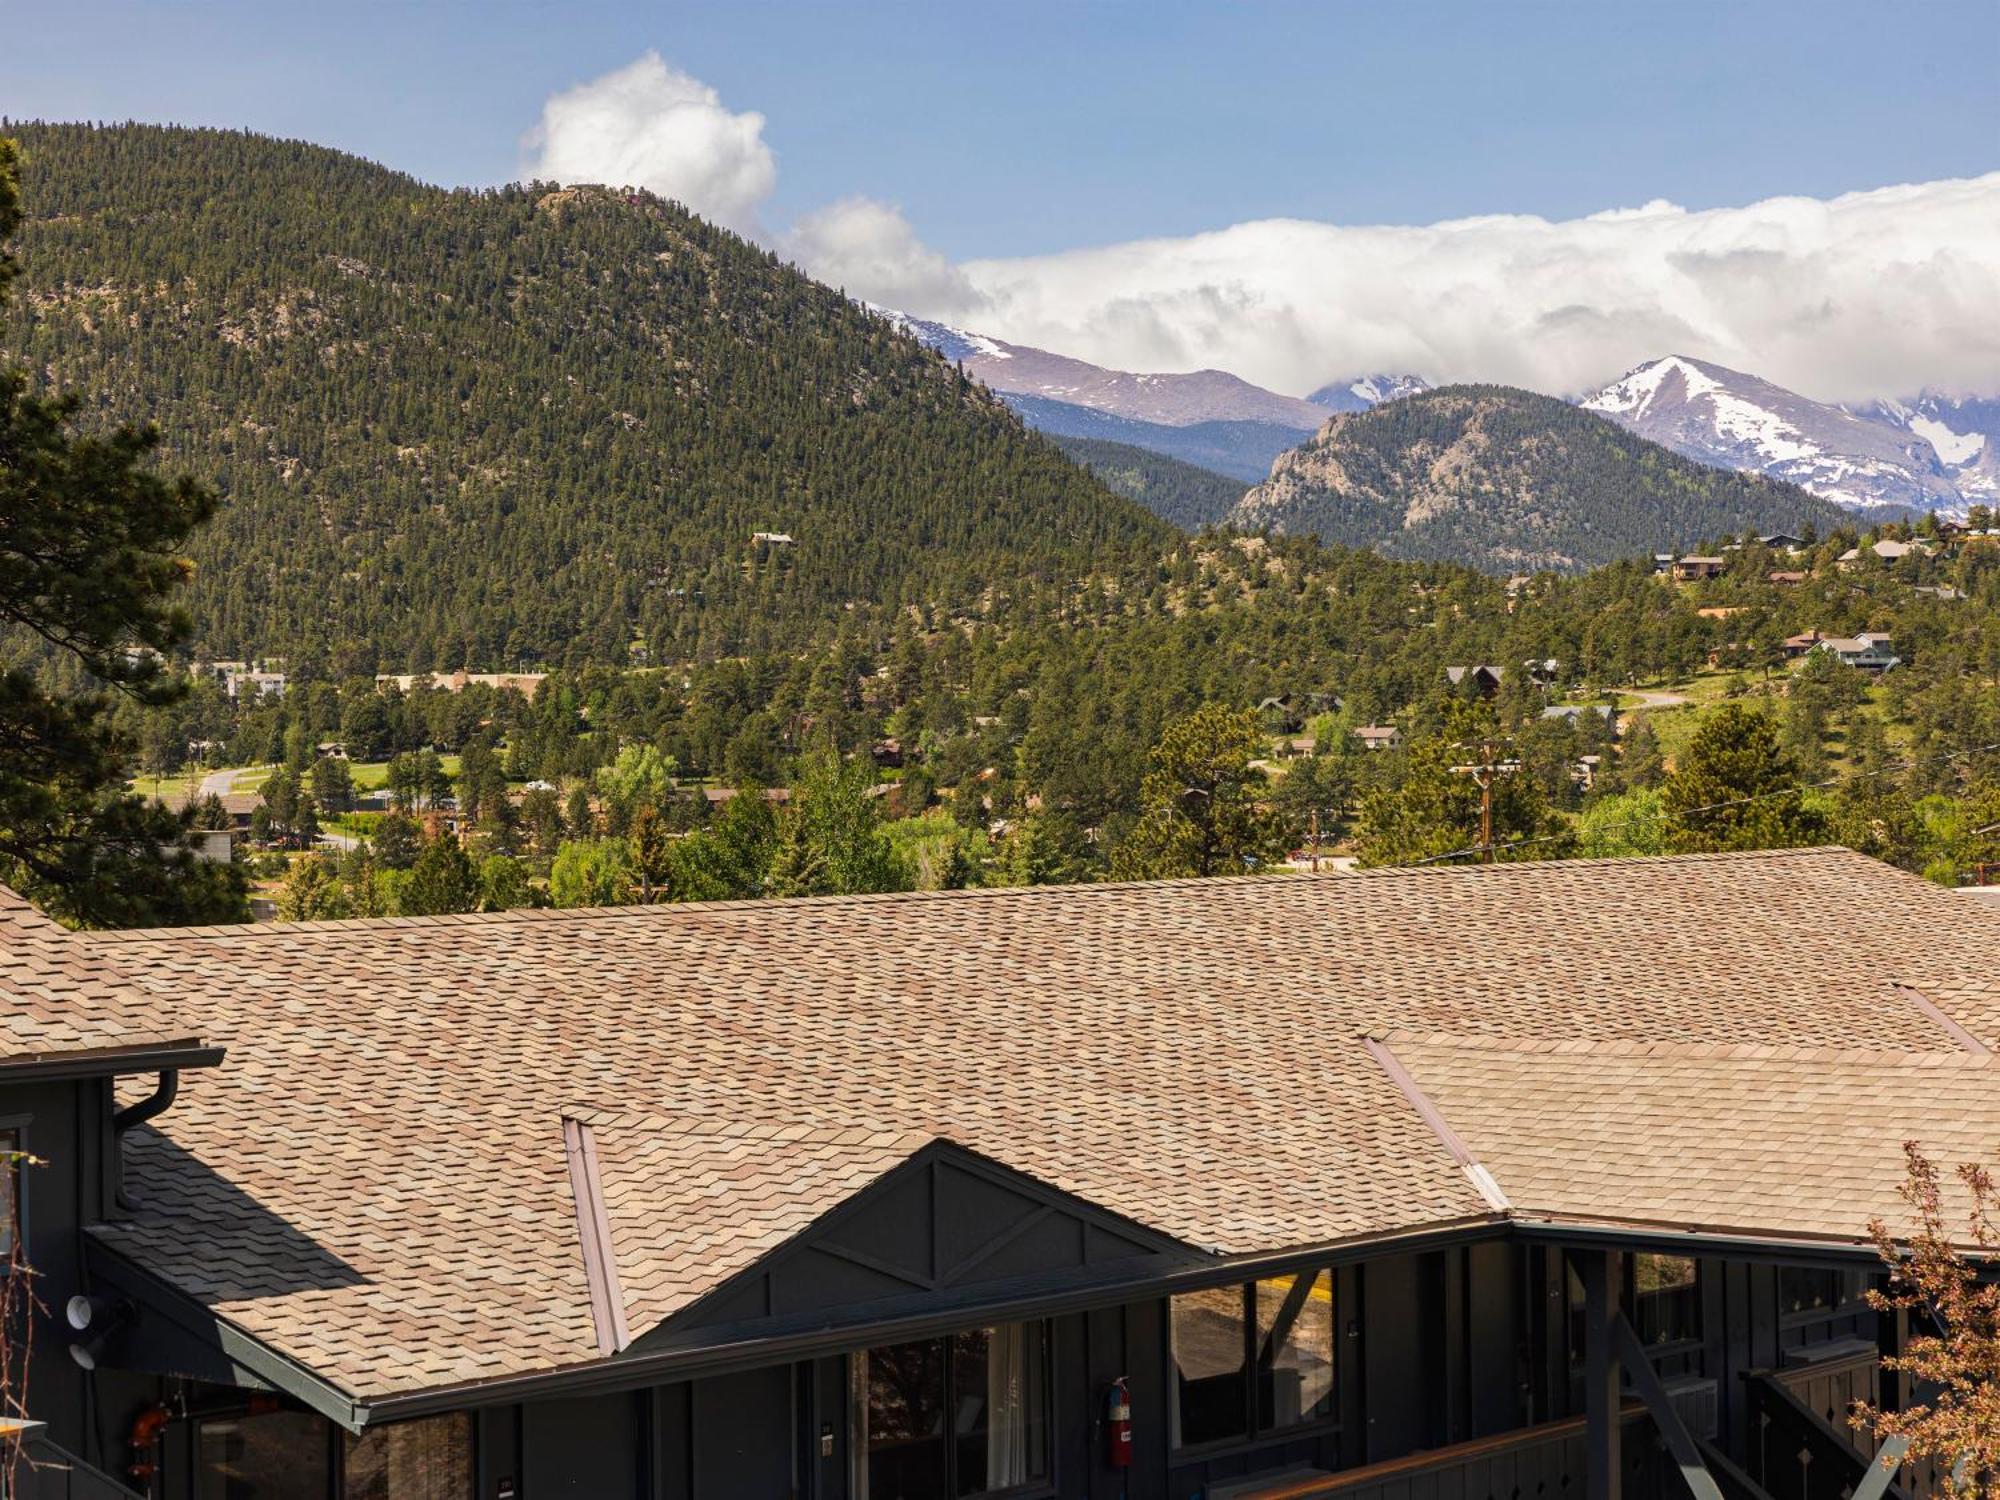 Trailborn Rocky Mountains Outpost Hotel Estes Park Exterior photo